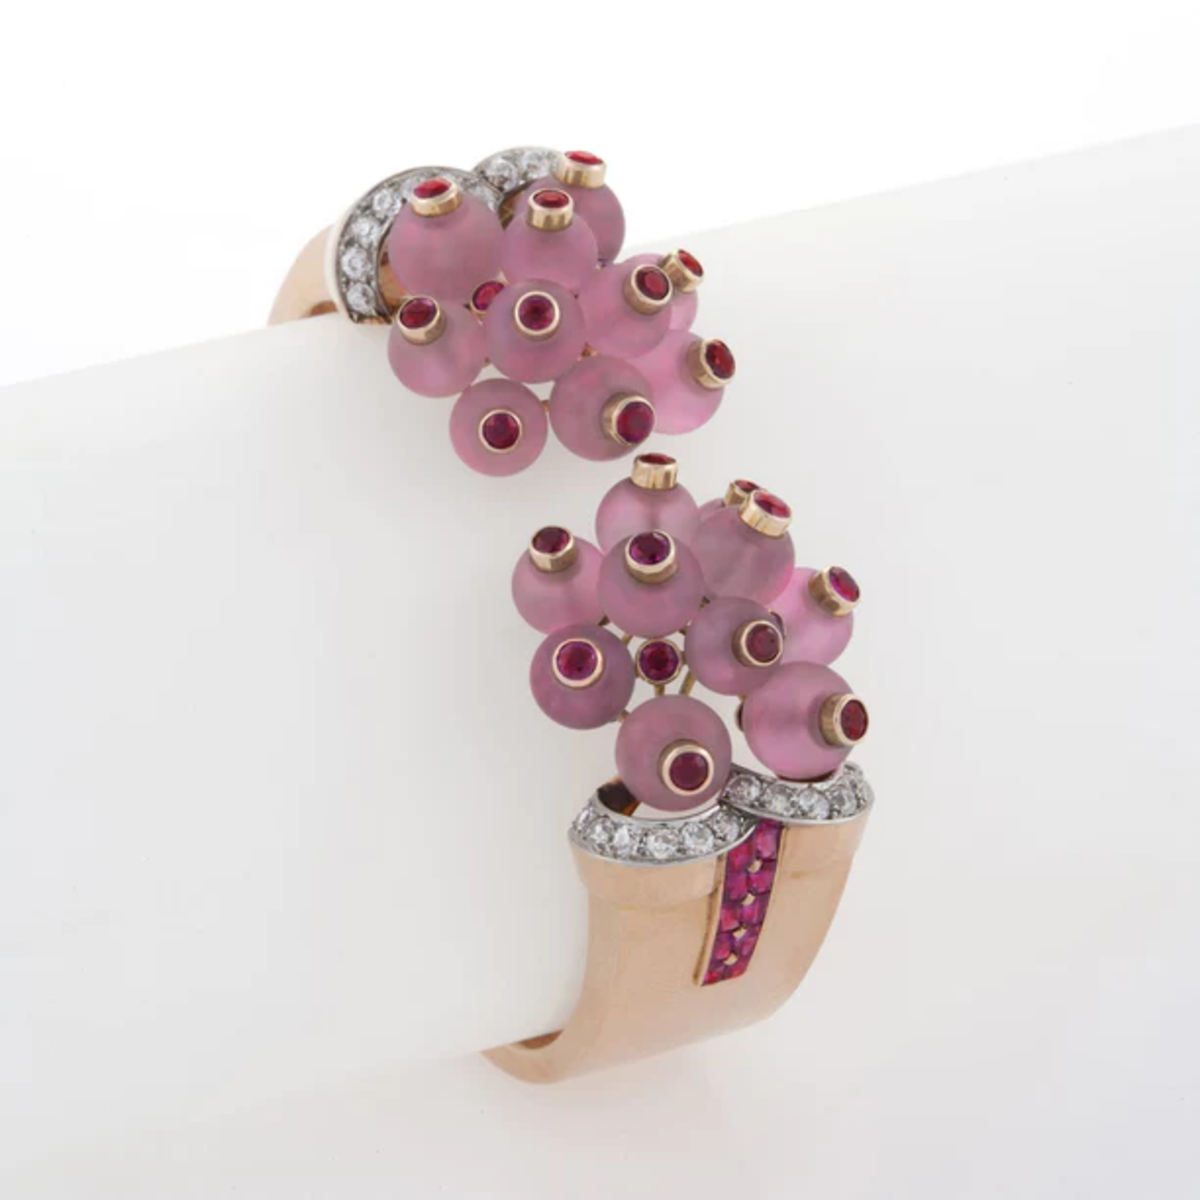 Verger Freres 1930s 18KT Rose Gold Ruby, Diamond & Rose Quartz Cuff Bracelet on wrist form